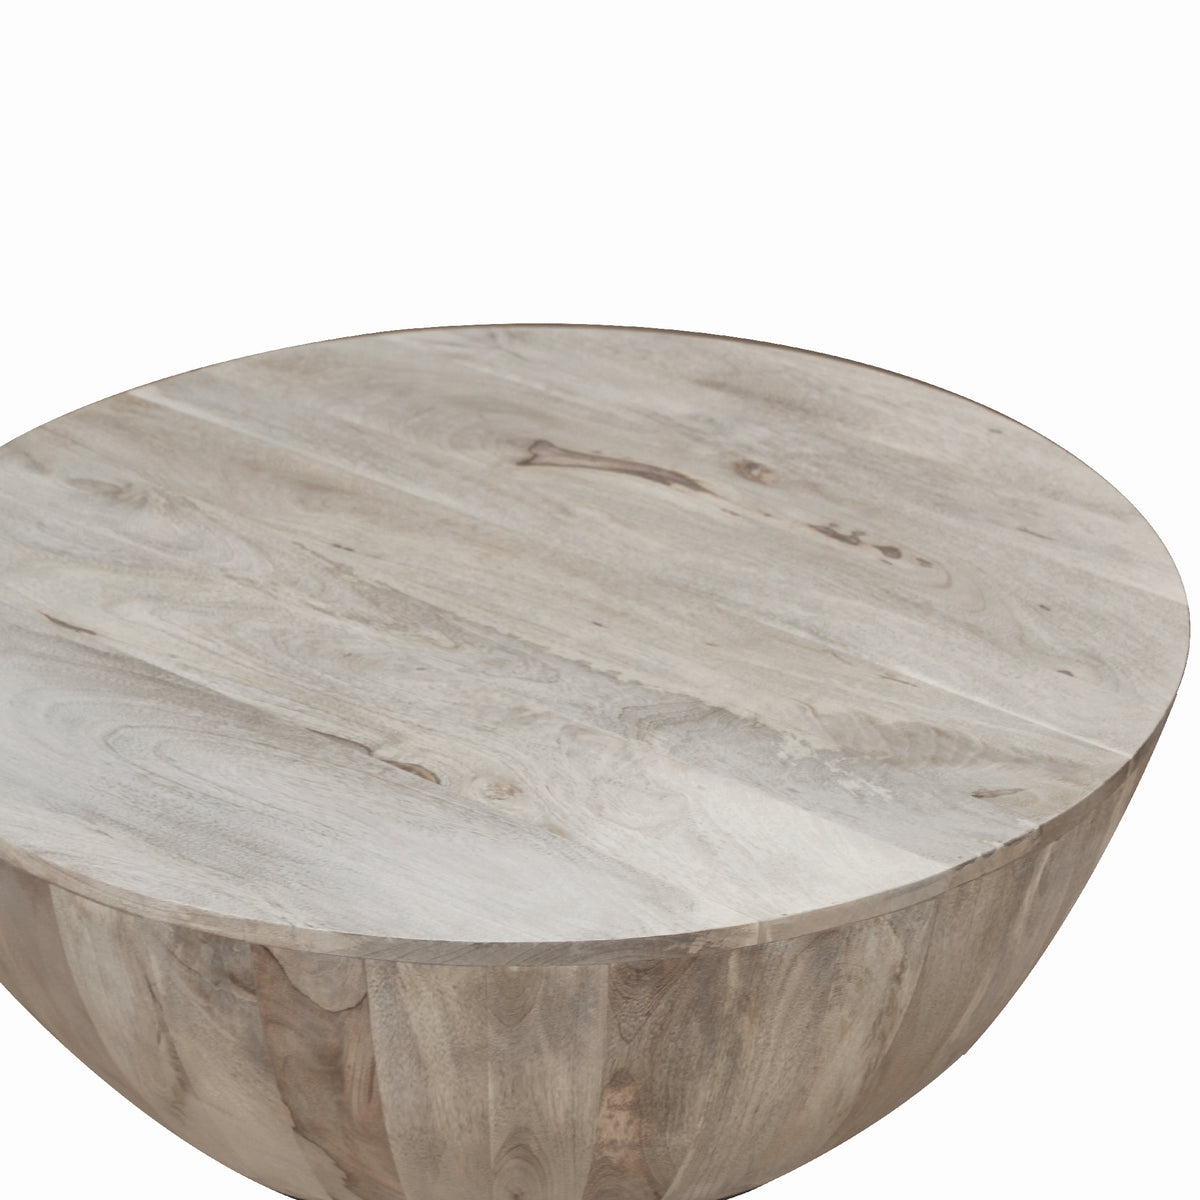 Arthur 12 Inch Round Mango Wood Coffee Table, Subtle Grains, Distressed White - UPT-32181